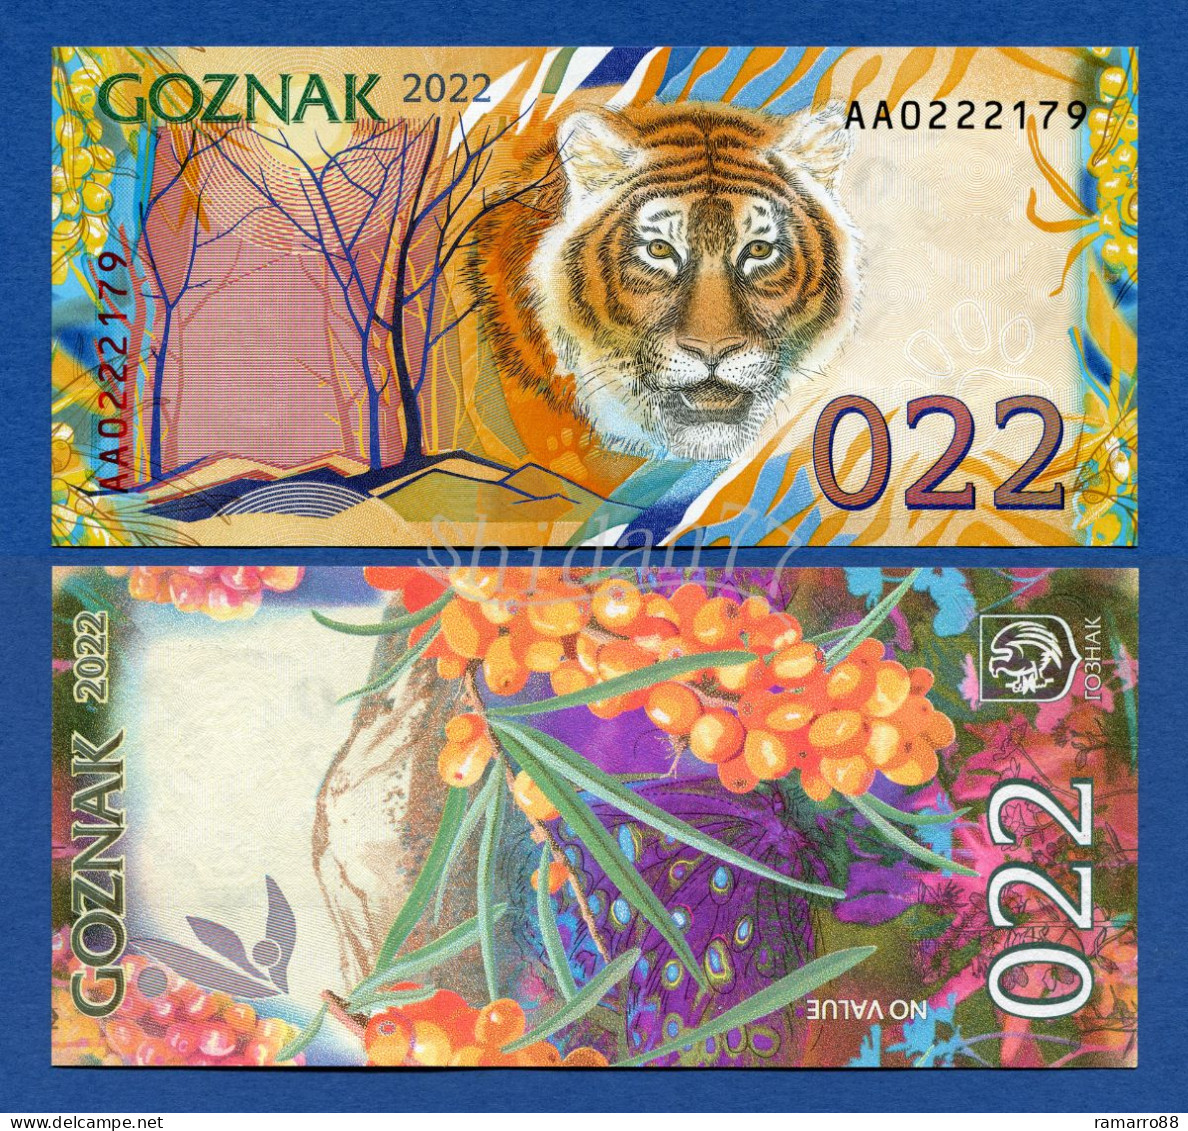 Goznak - 022 Tiger Type C (Autumn) - Very Rare - 2022  Specimen Test Note Unc - Ficción & Especímenes